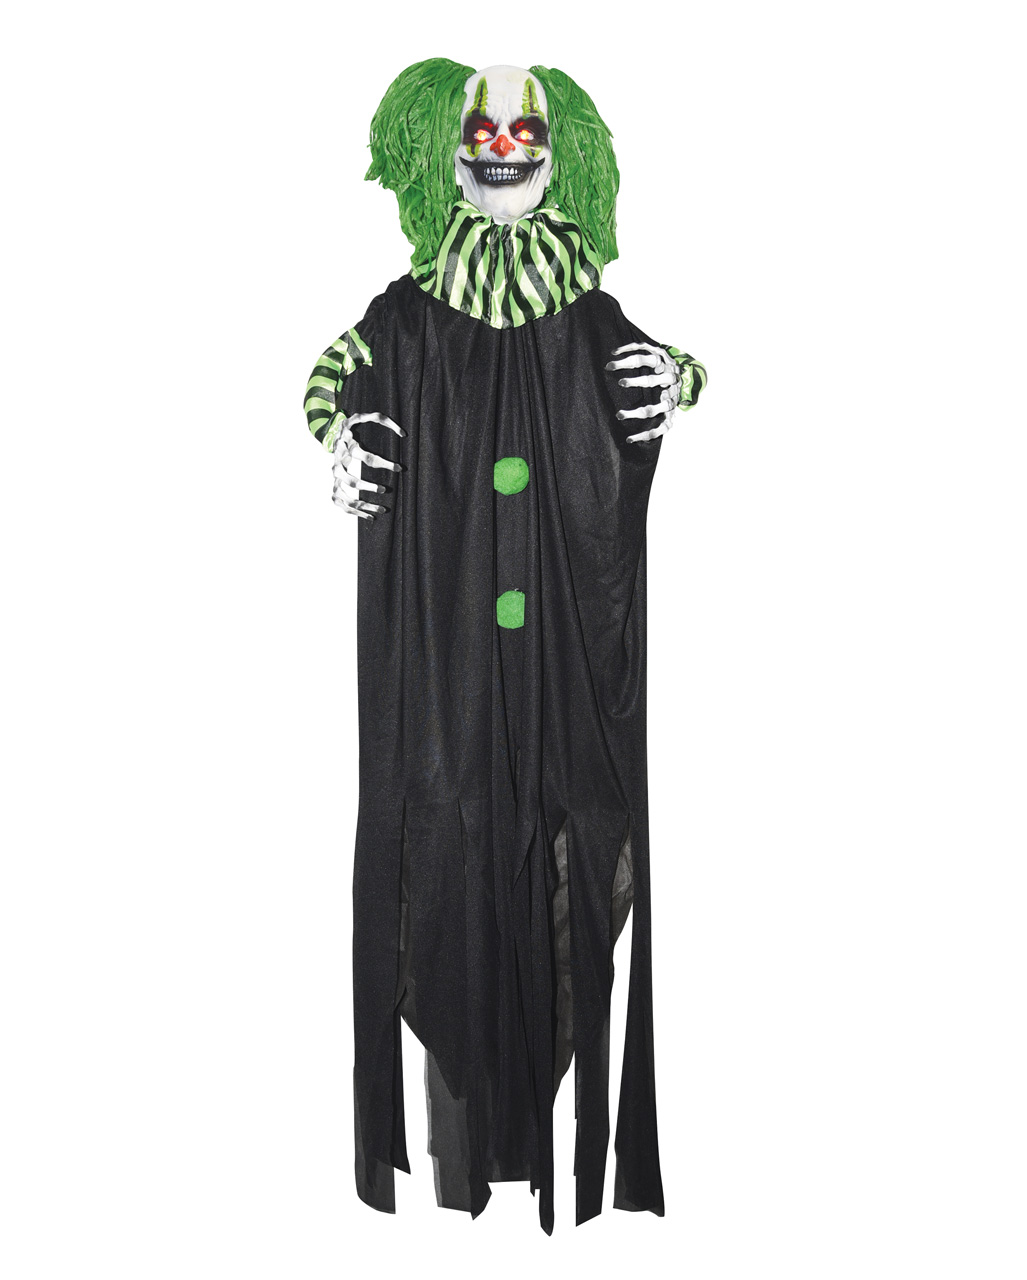 Killer Clown With Green Hair & LED Eyes 🎃 | Horror-Shop.com